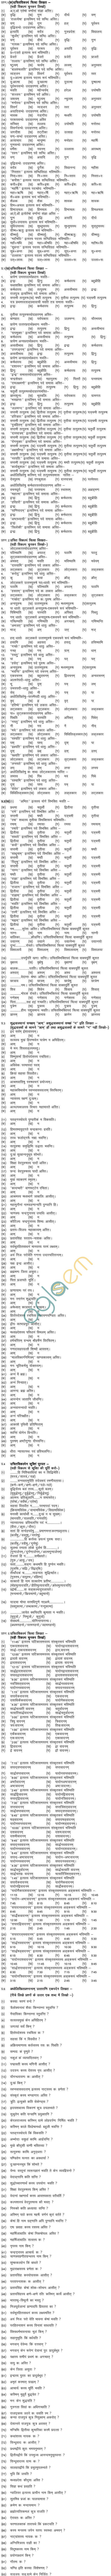 MP Board Class IX Question Bank - Sanskrit (Special)